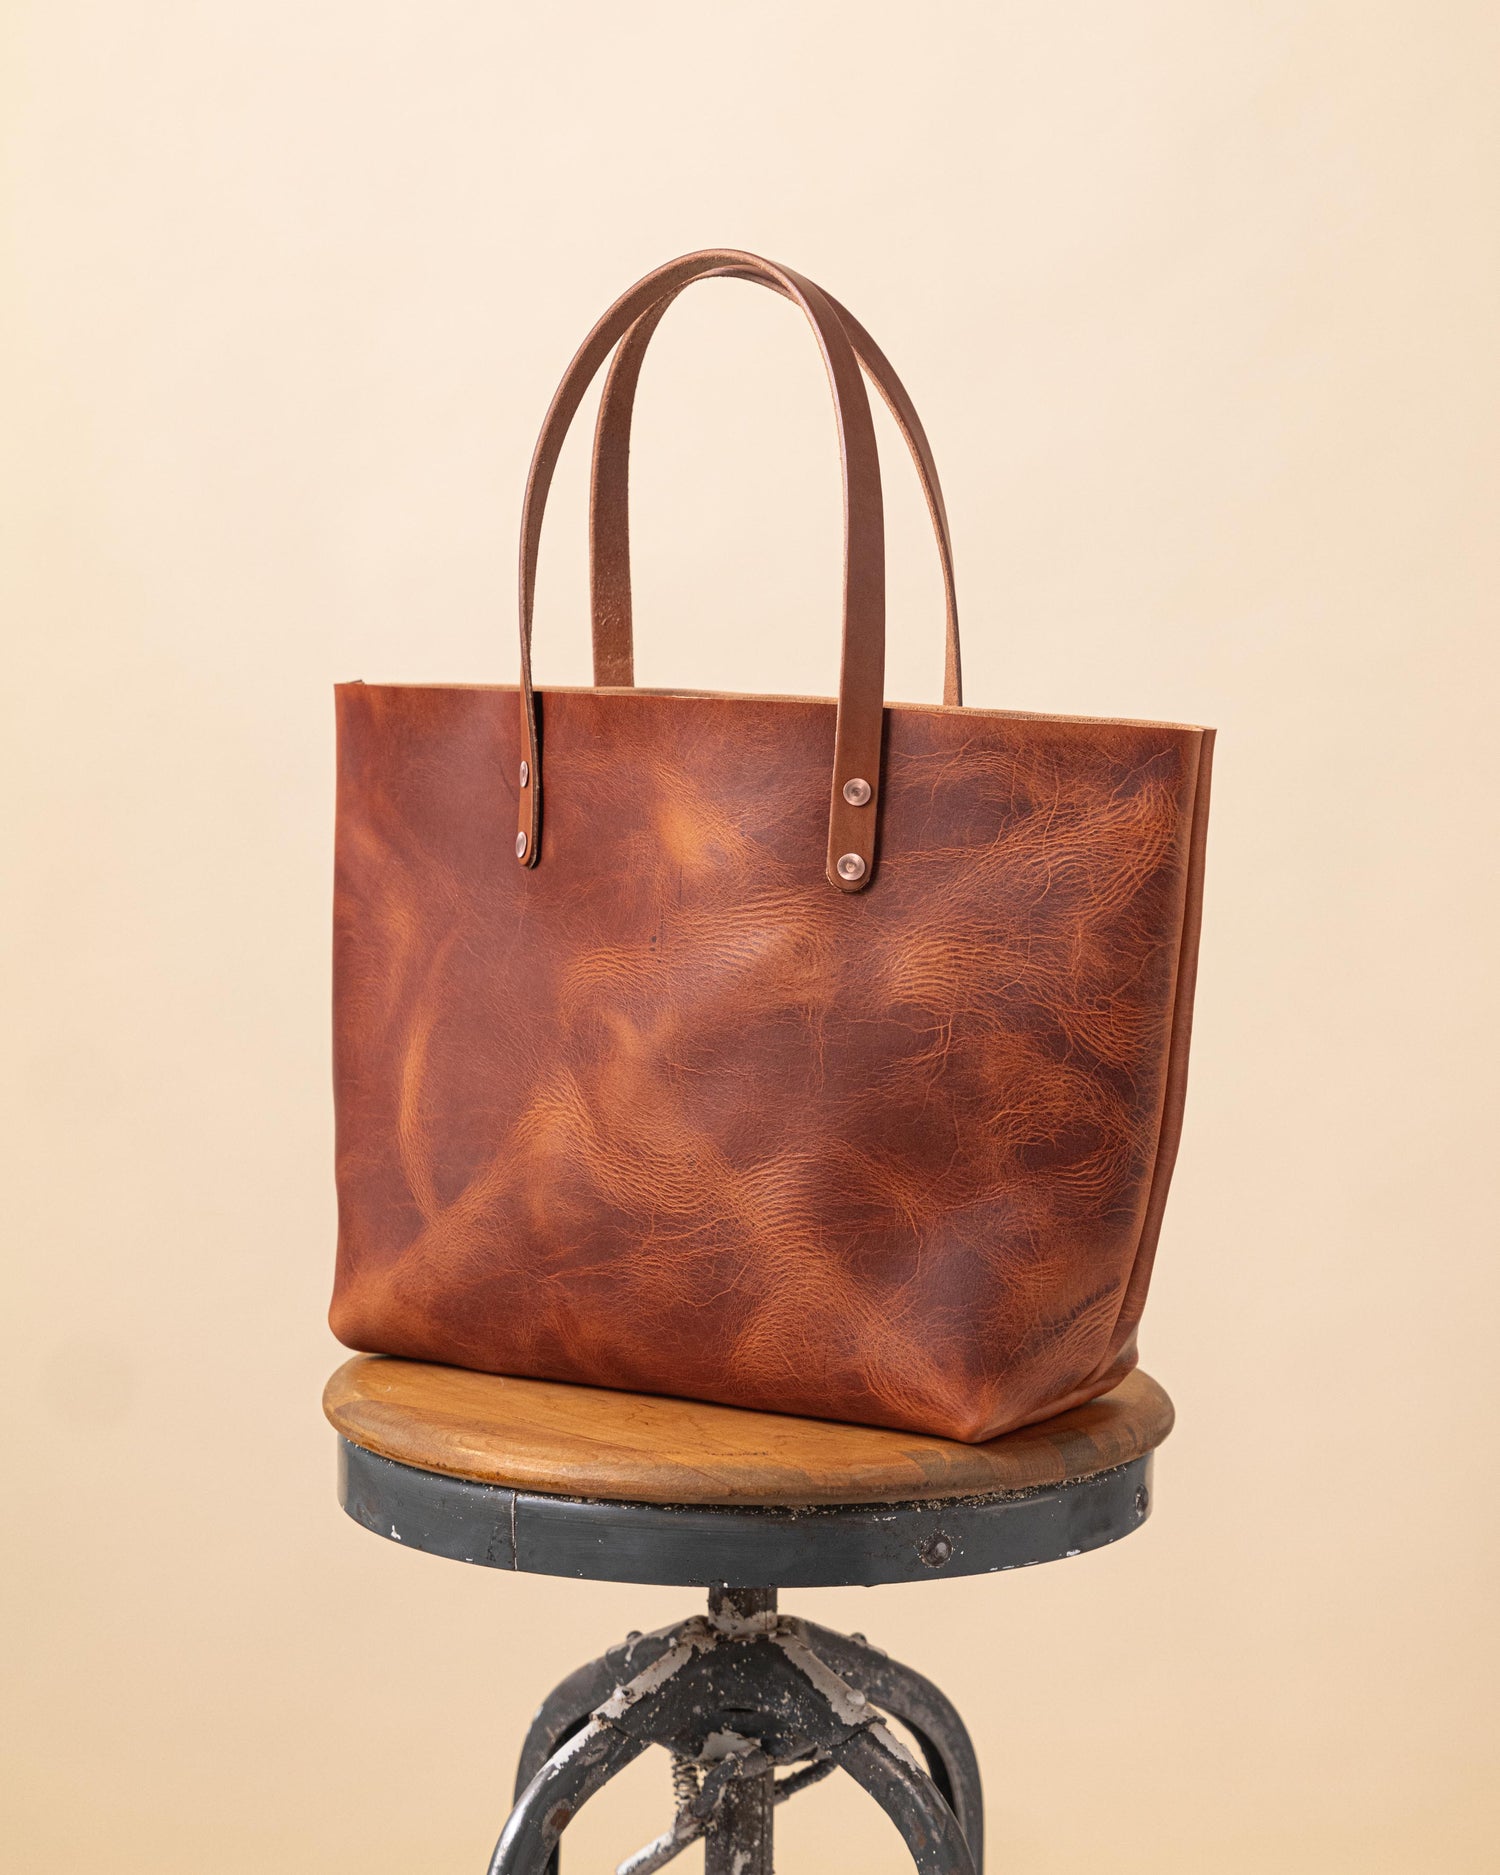 English Tan Tote | Horween Tote Bag Handmade at KMM & Co. 11-inch +$25 / No Thanks